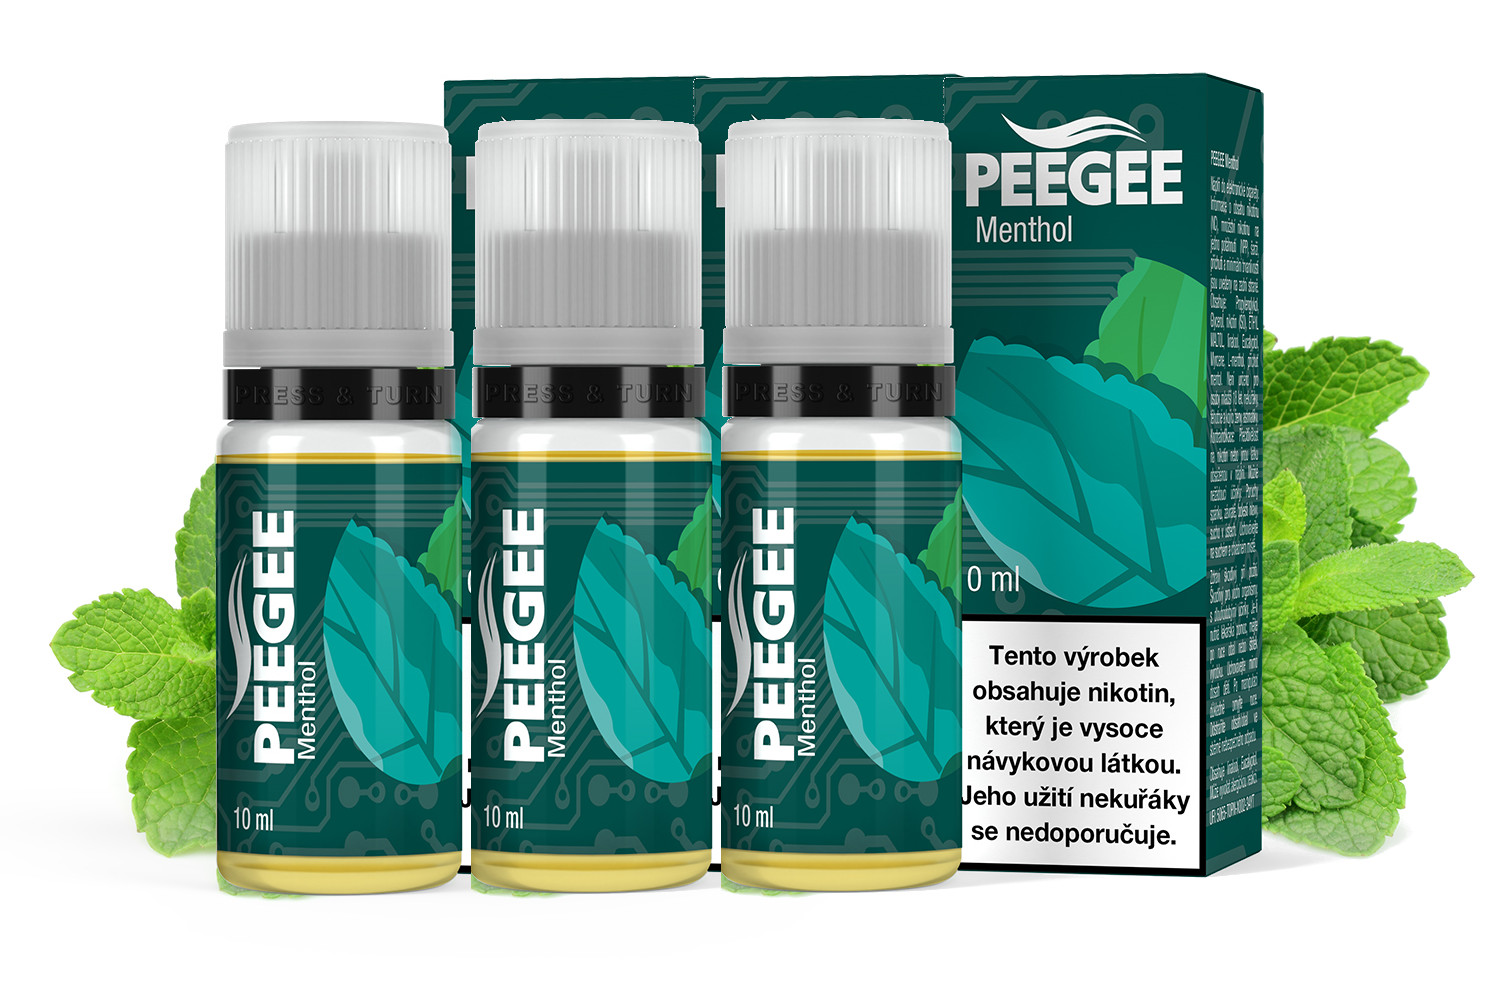 PEEGEE - Mentol (Menthol) 3x10ml Obsah nikotinu: 18mg